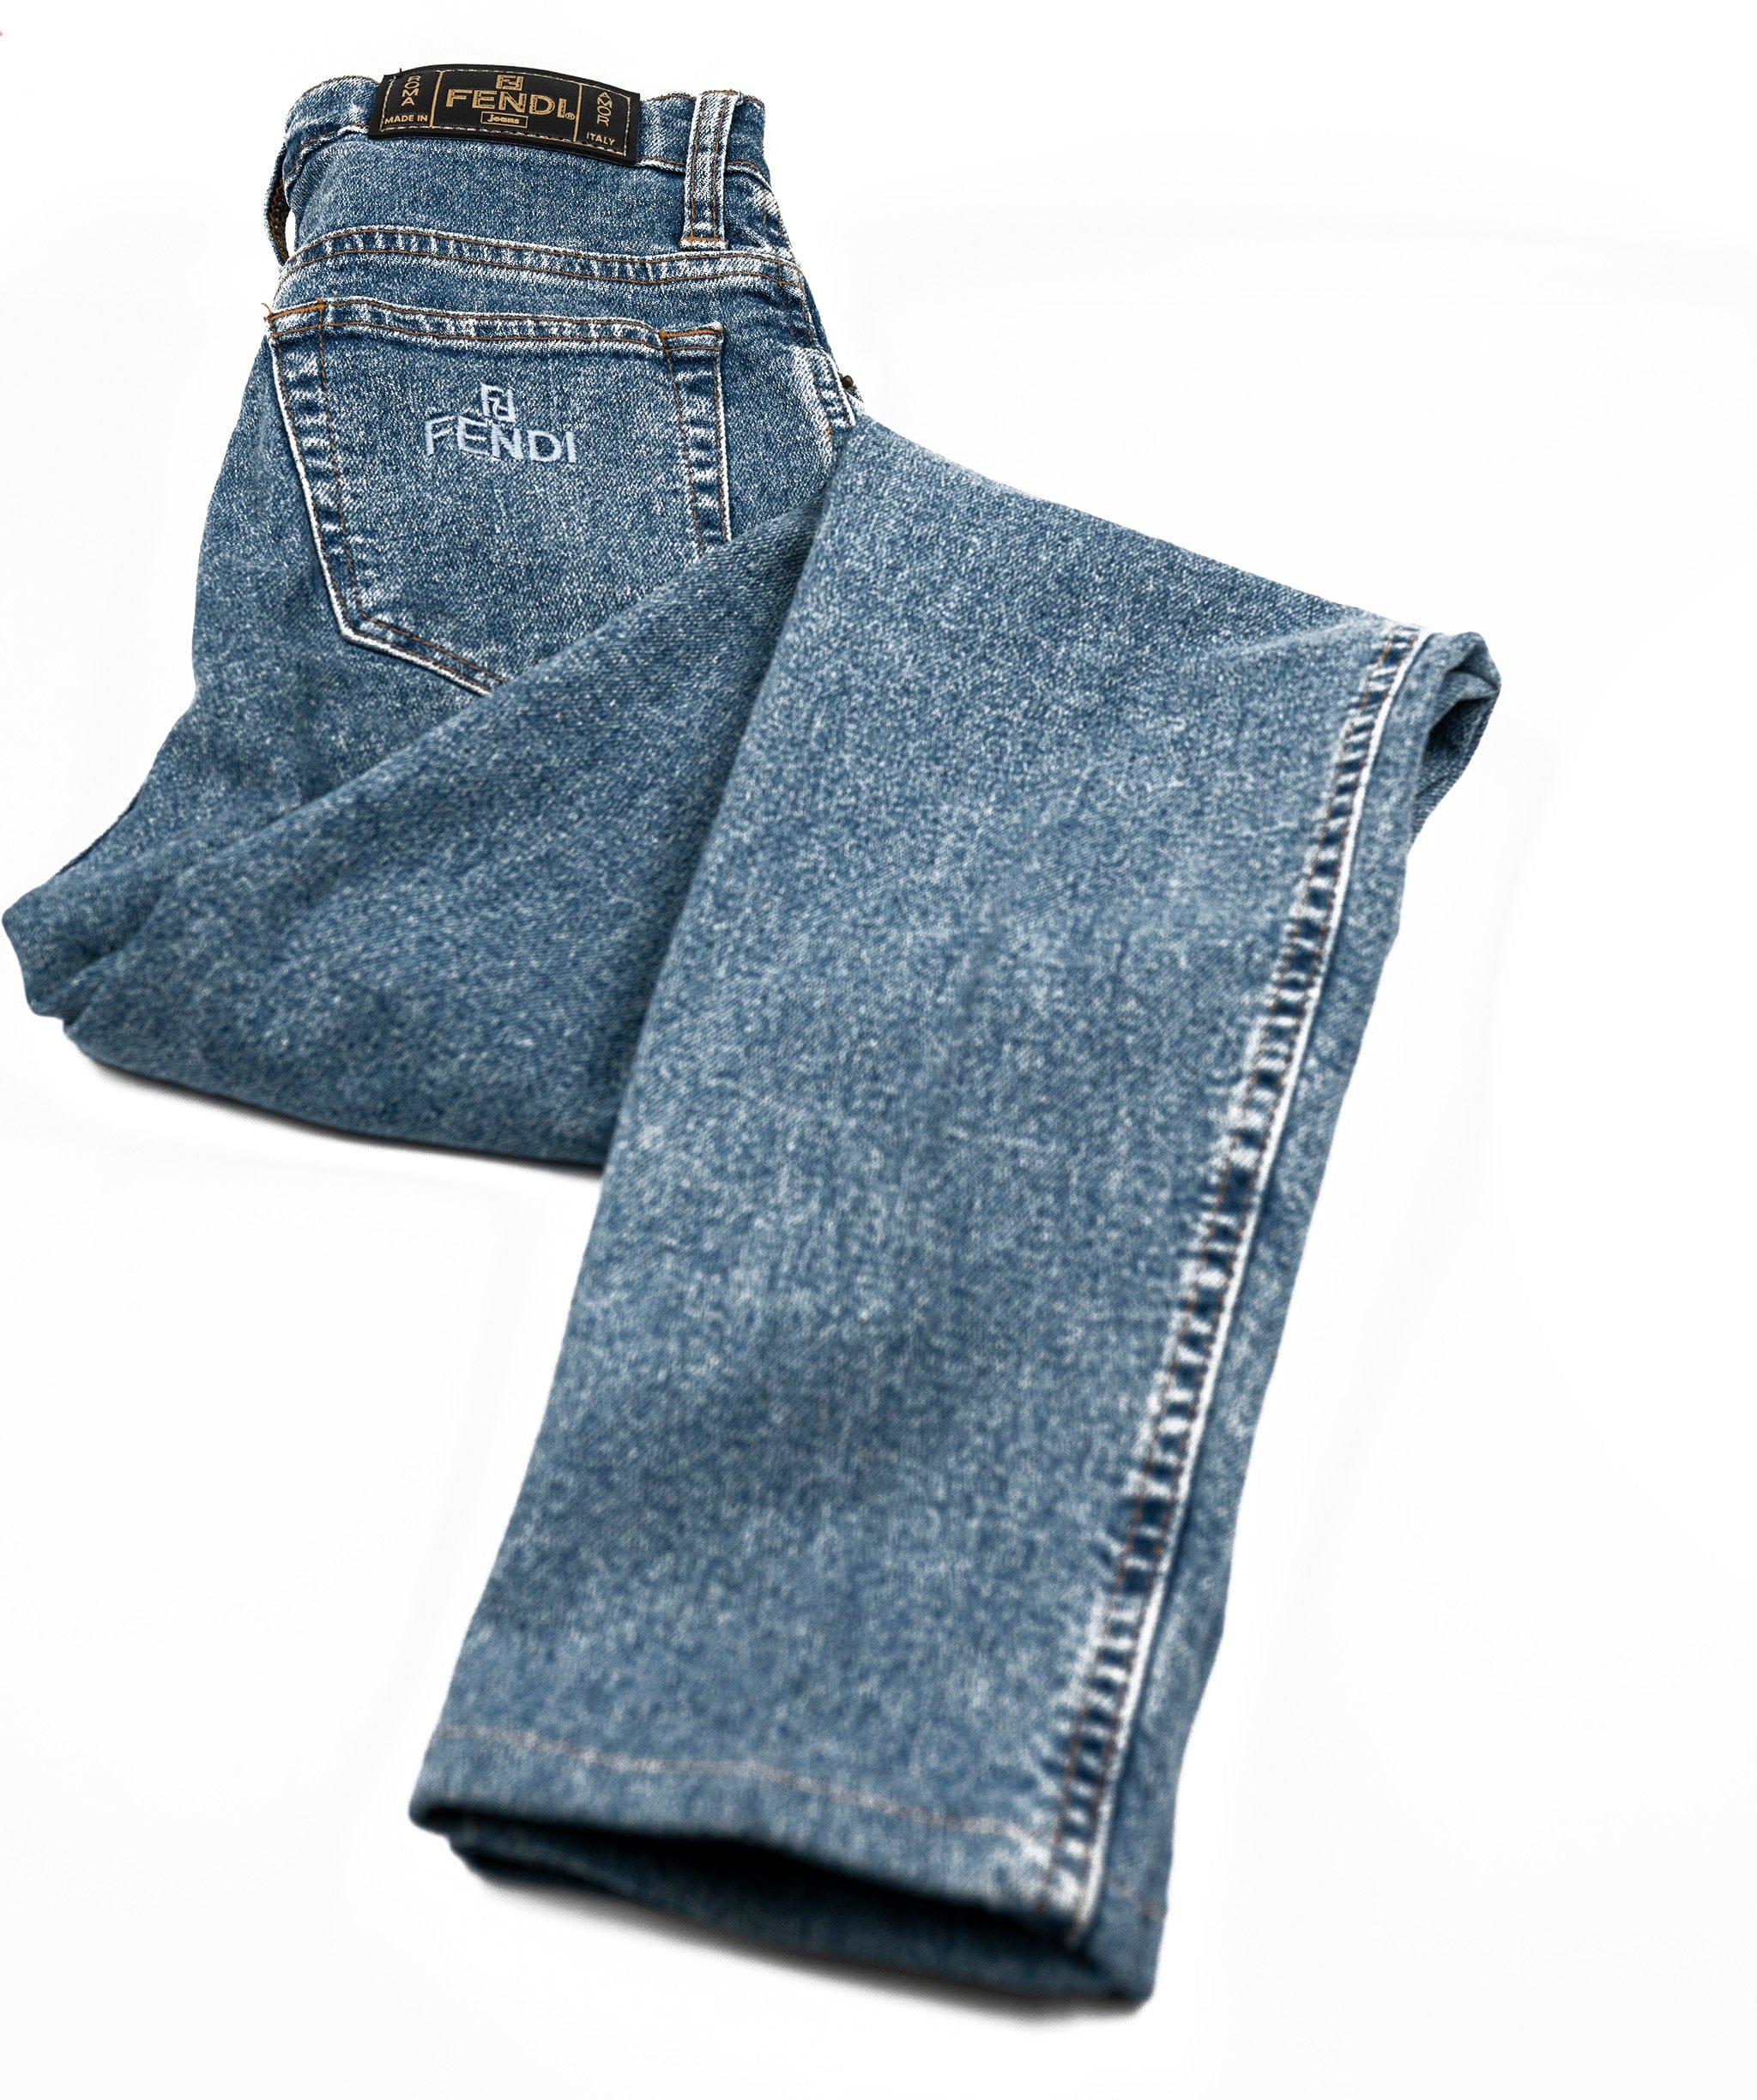 Fendi Fendi jeans ALL0190